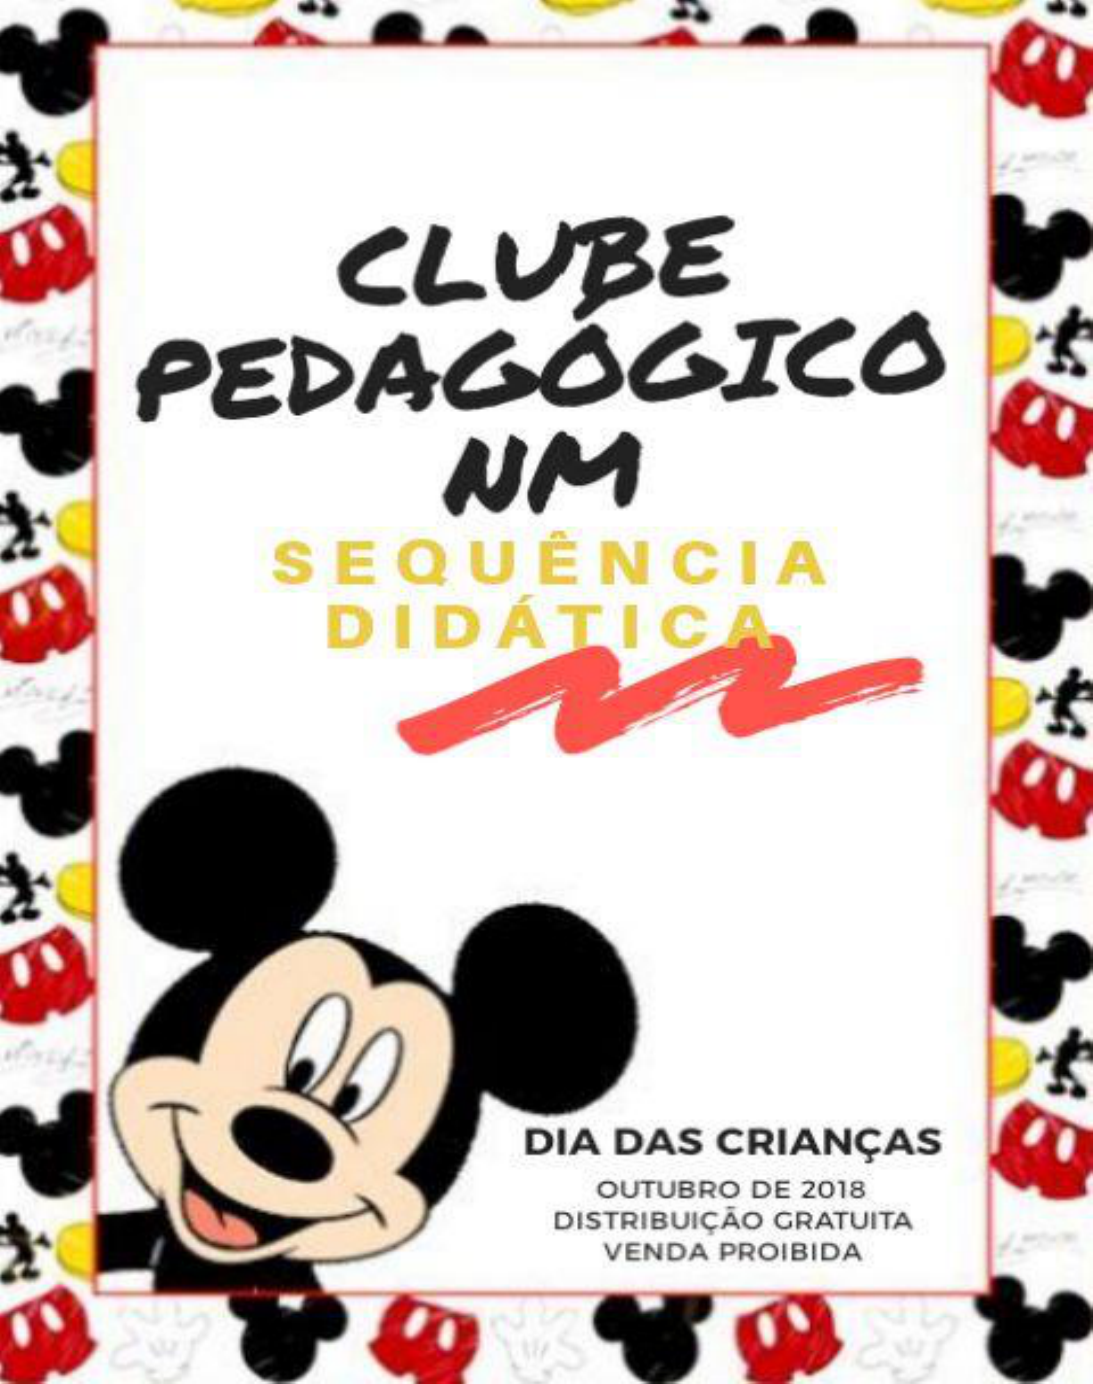 SEQUENCIAS DIVERSAS - CLUBE PEDAGÓGICO NM (1) - Pedagogia